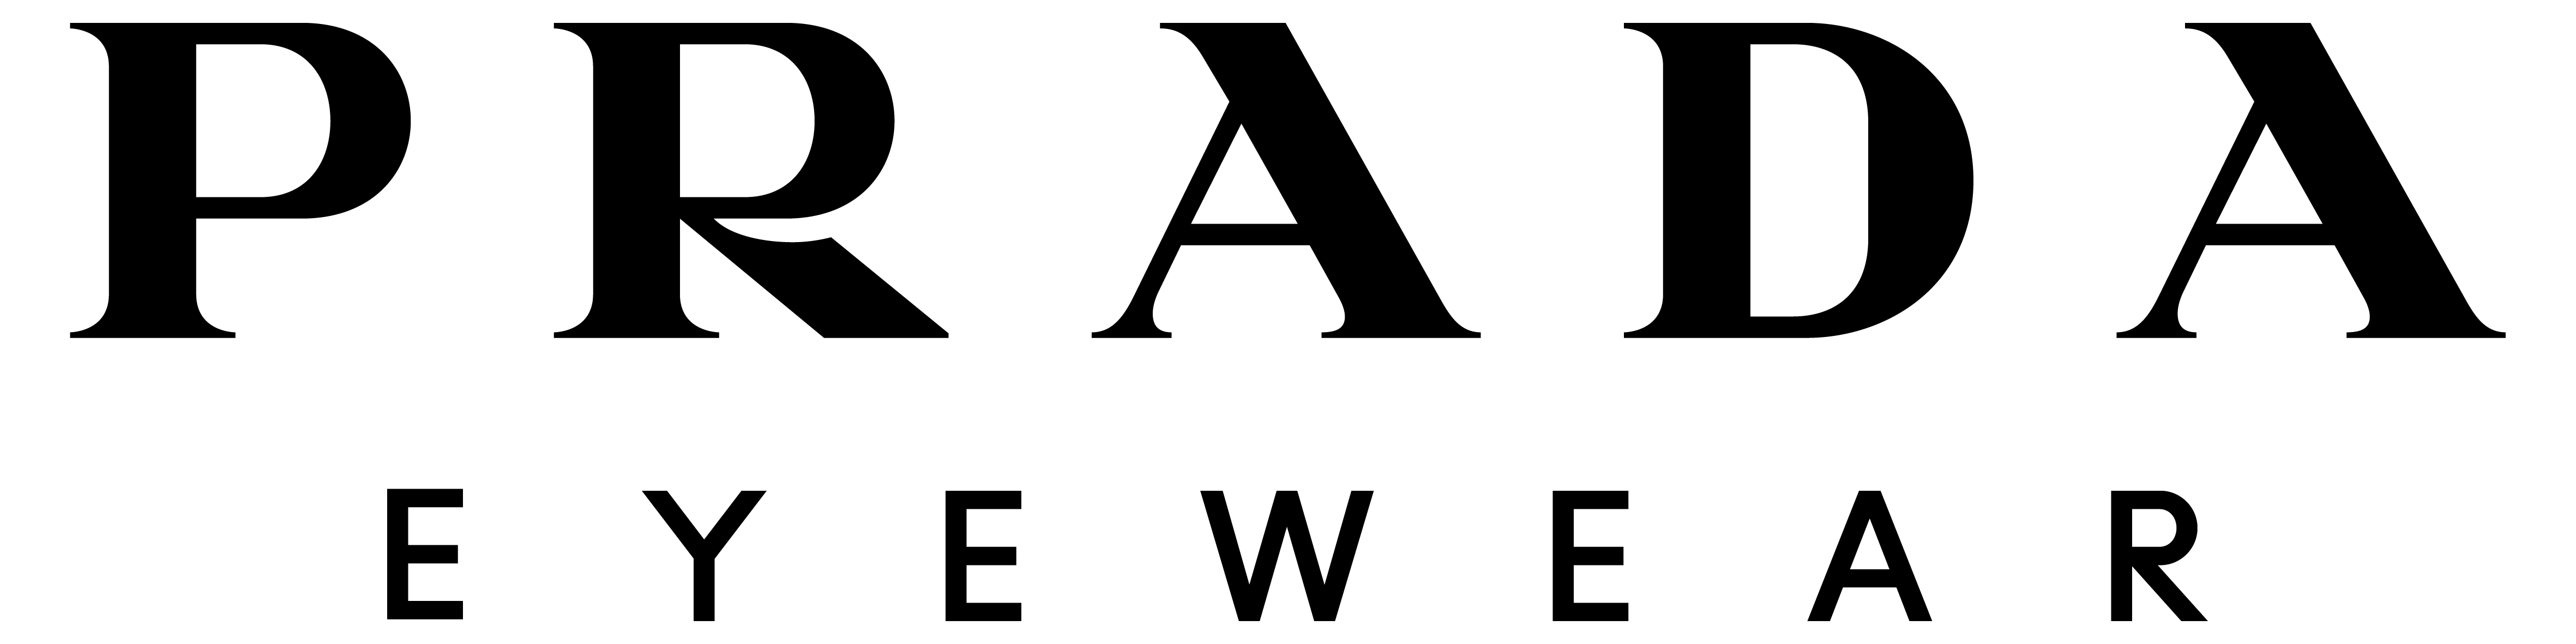 prada eyewear logo